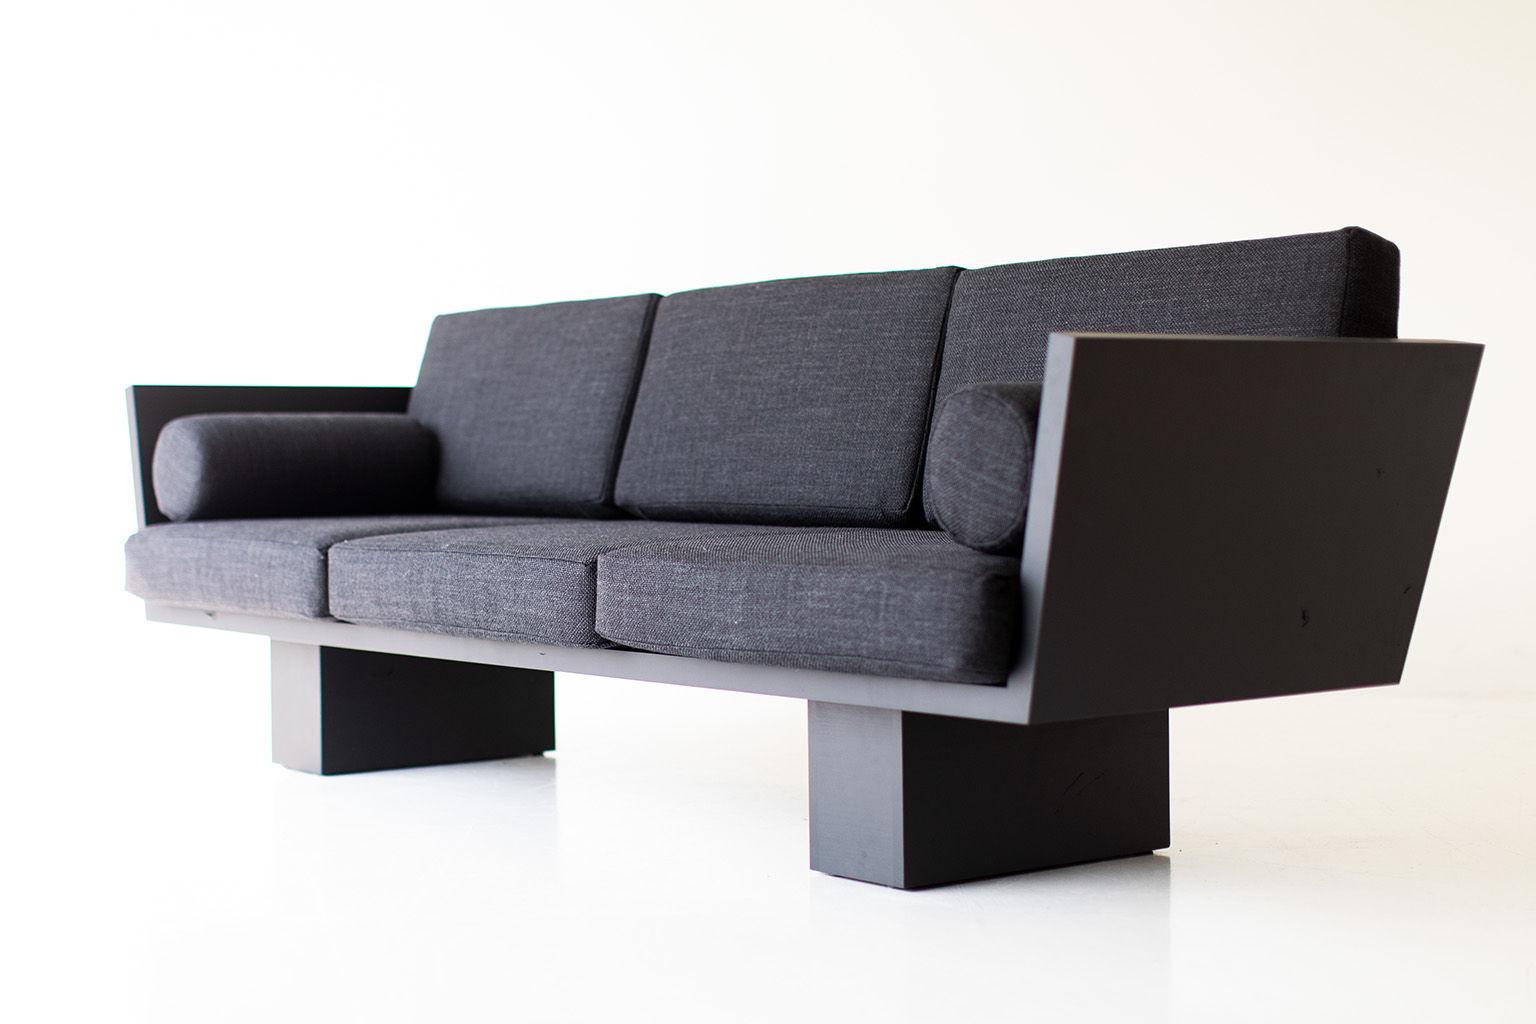 modern outdoor sofas